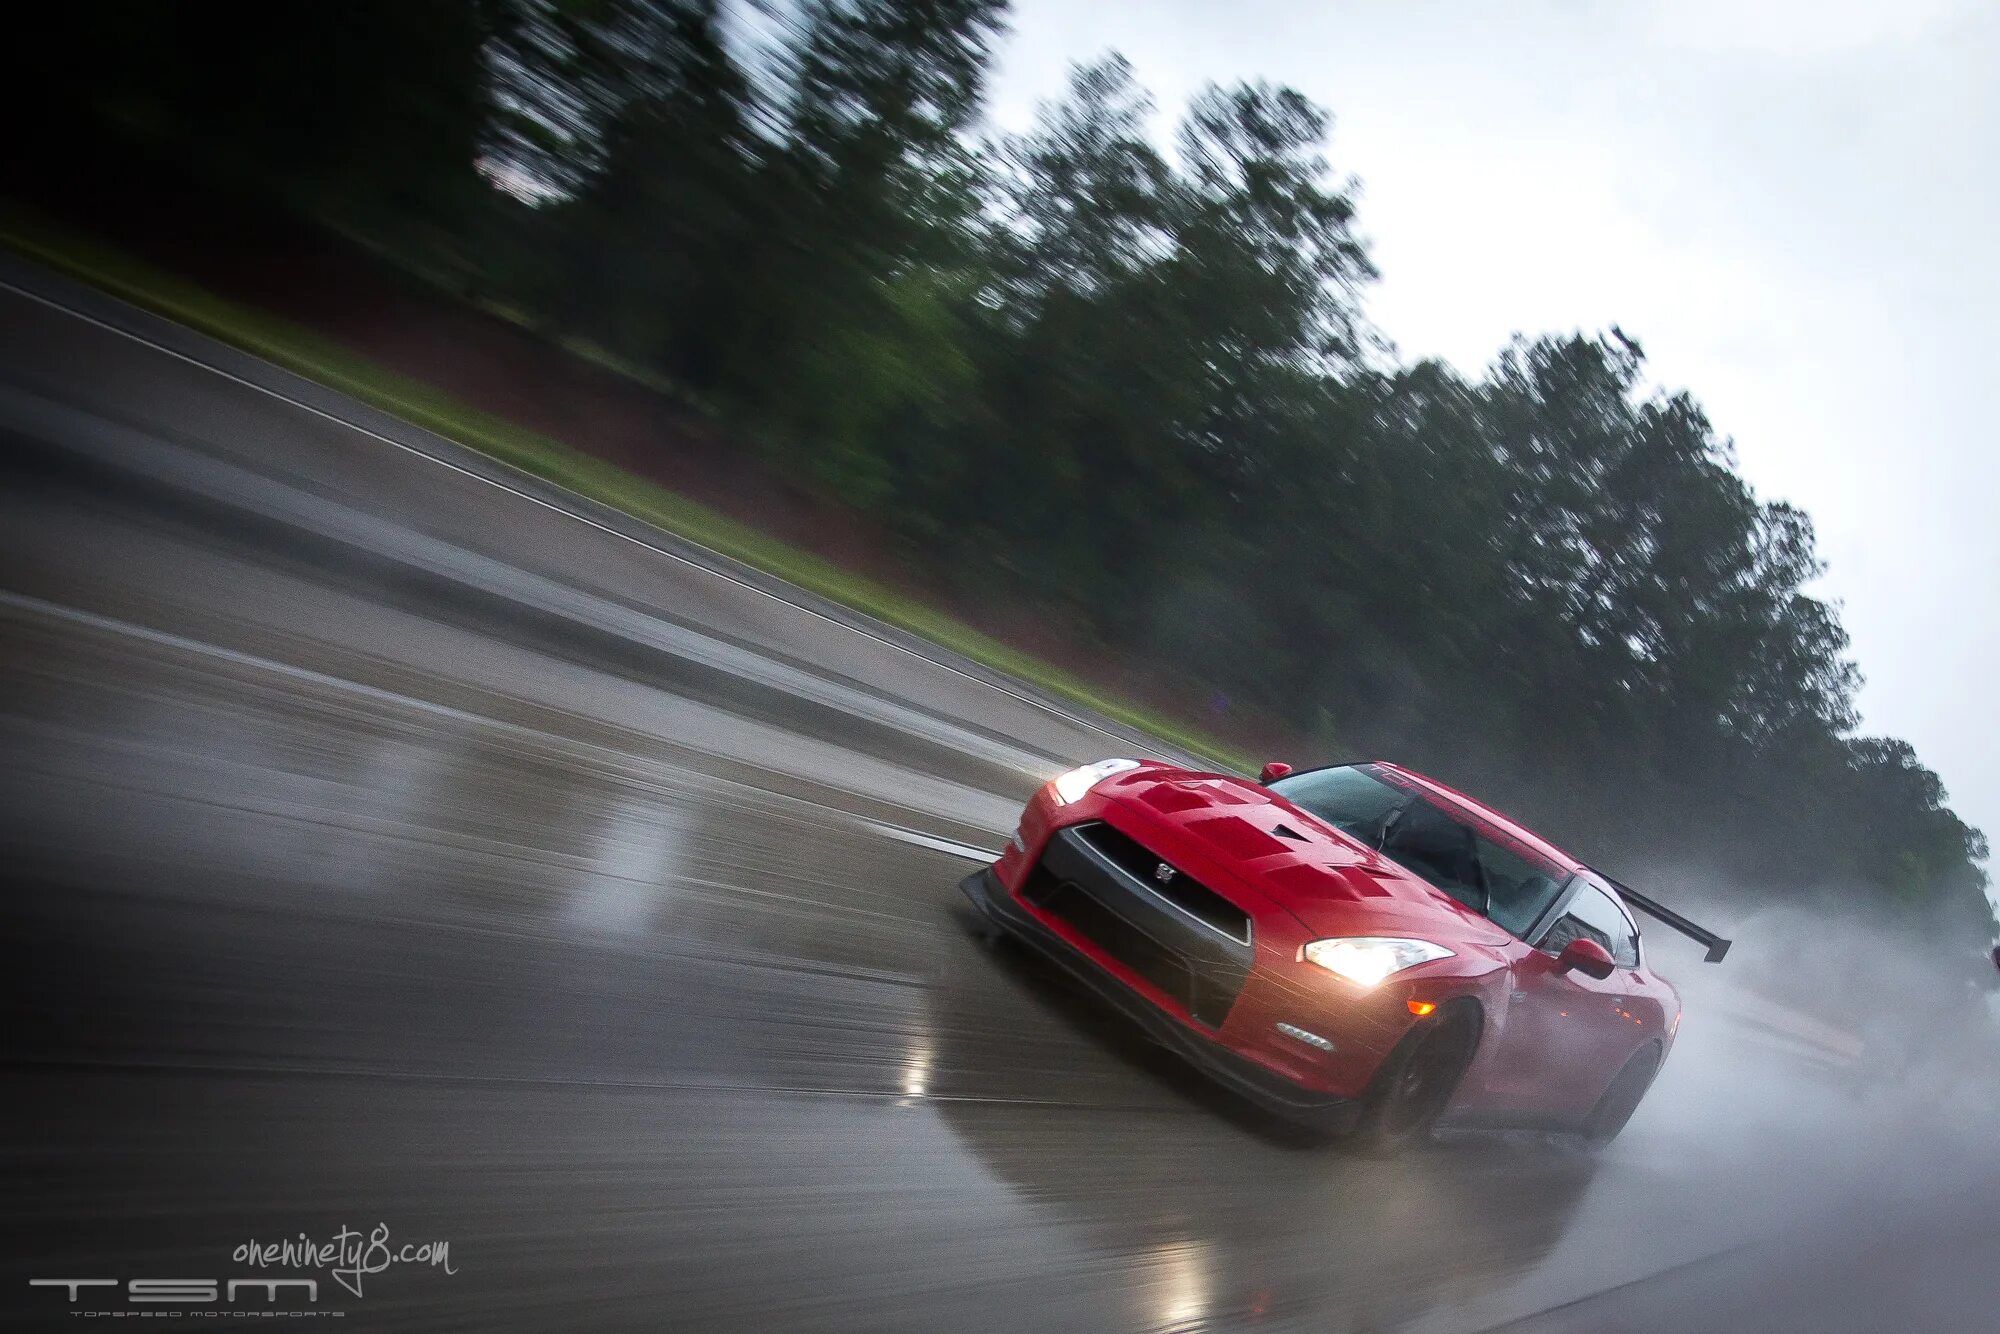 Driver rain. Nissan GTR r35 дождь. Ниссан ГТР под дождем. Nissan Skyline скорость. Ниссан Скайлайн в дождь.